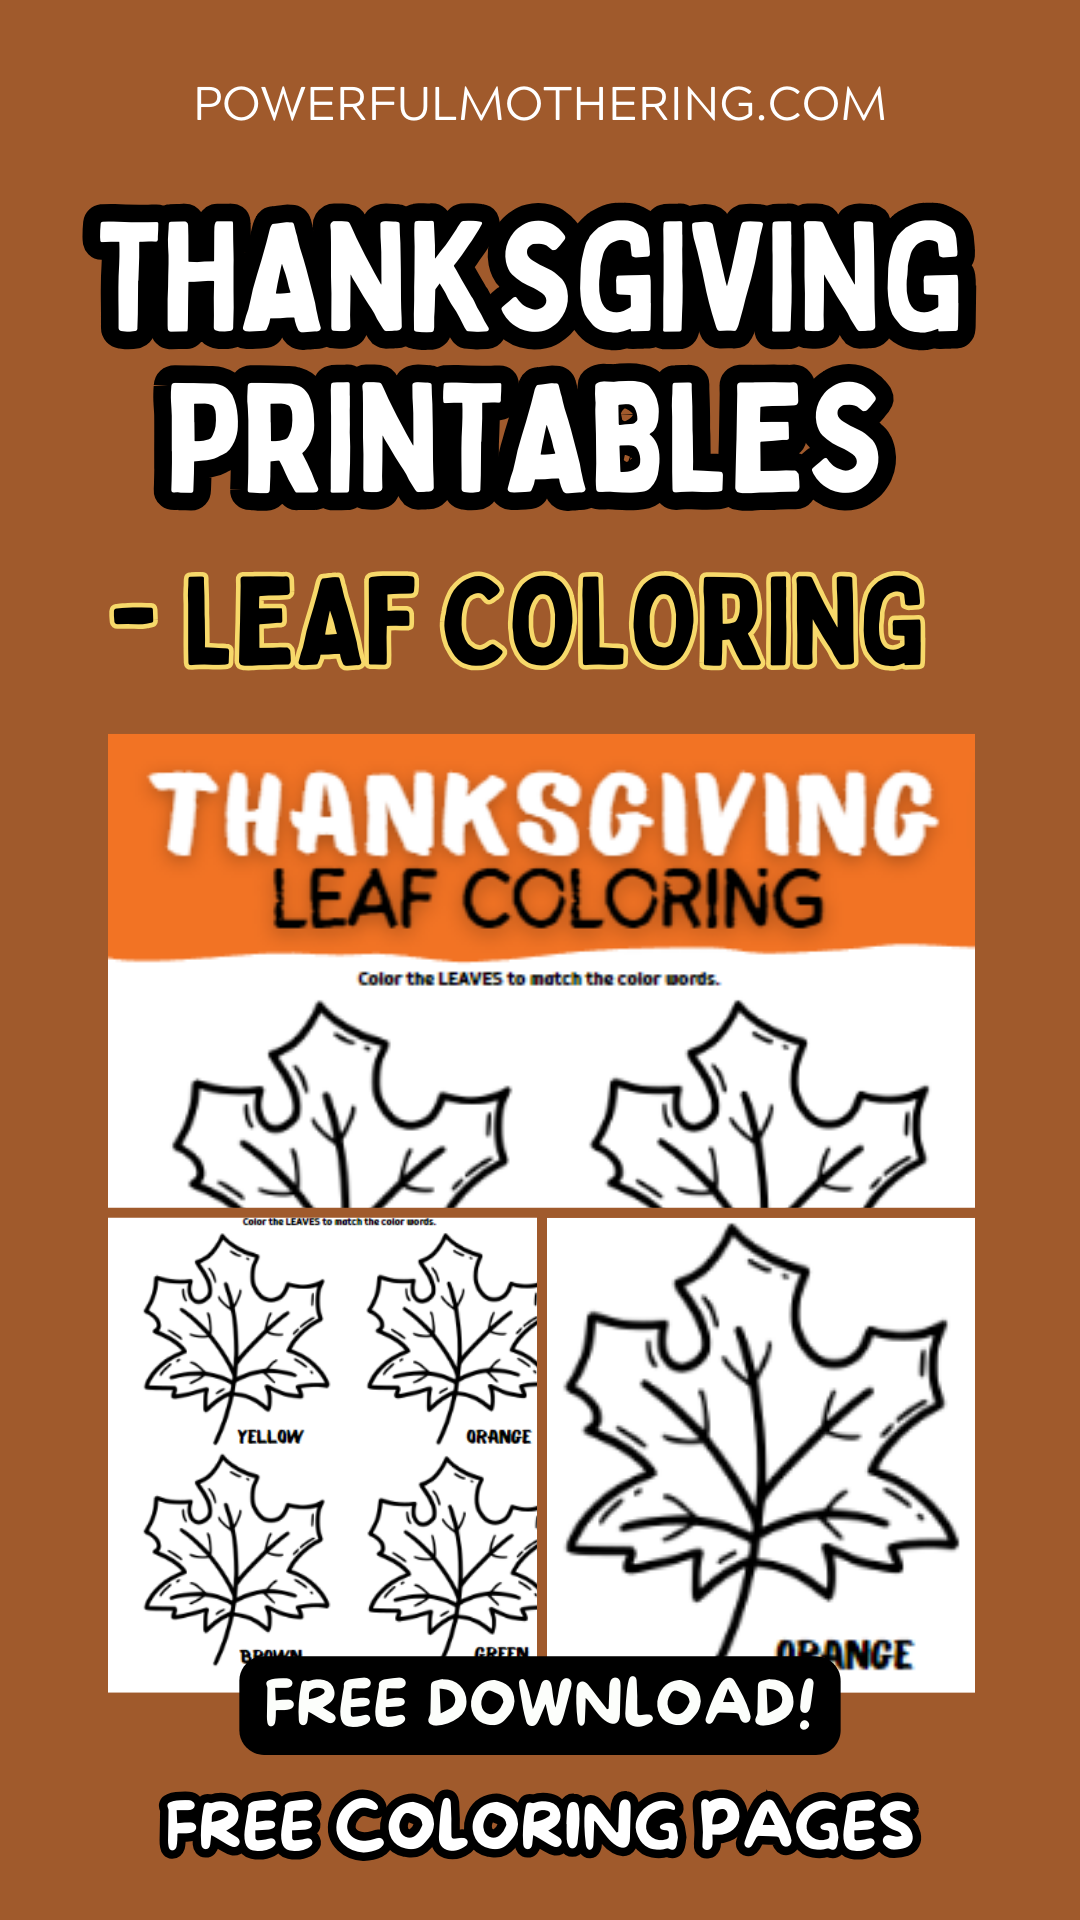 Thanksgiving printables for kids - leaf coloring